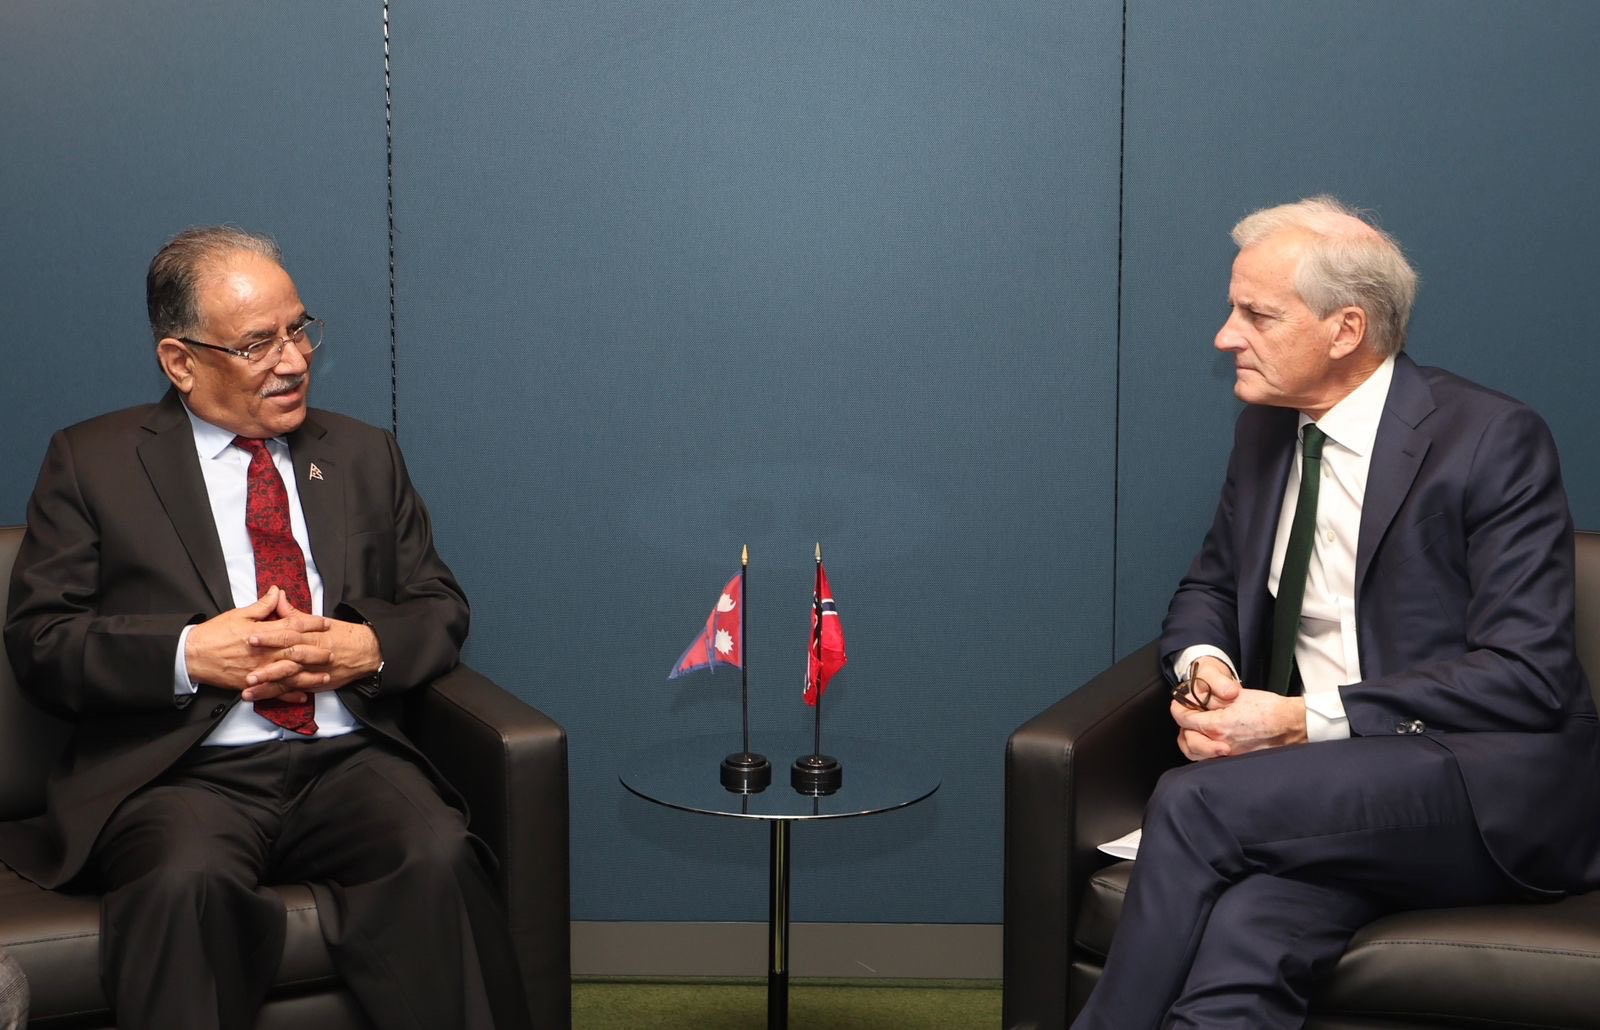 PM Dahal meets Norwegian Prime Minister Jonas in New York